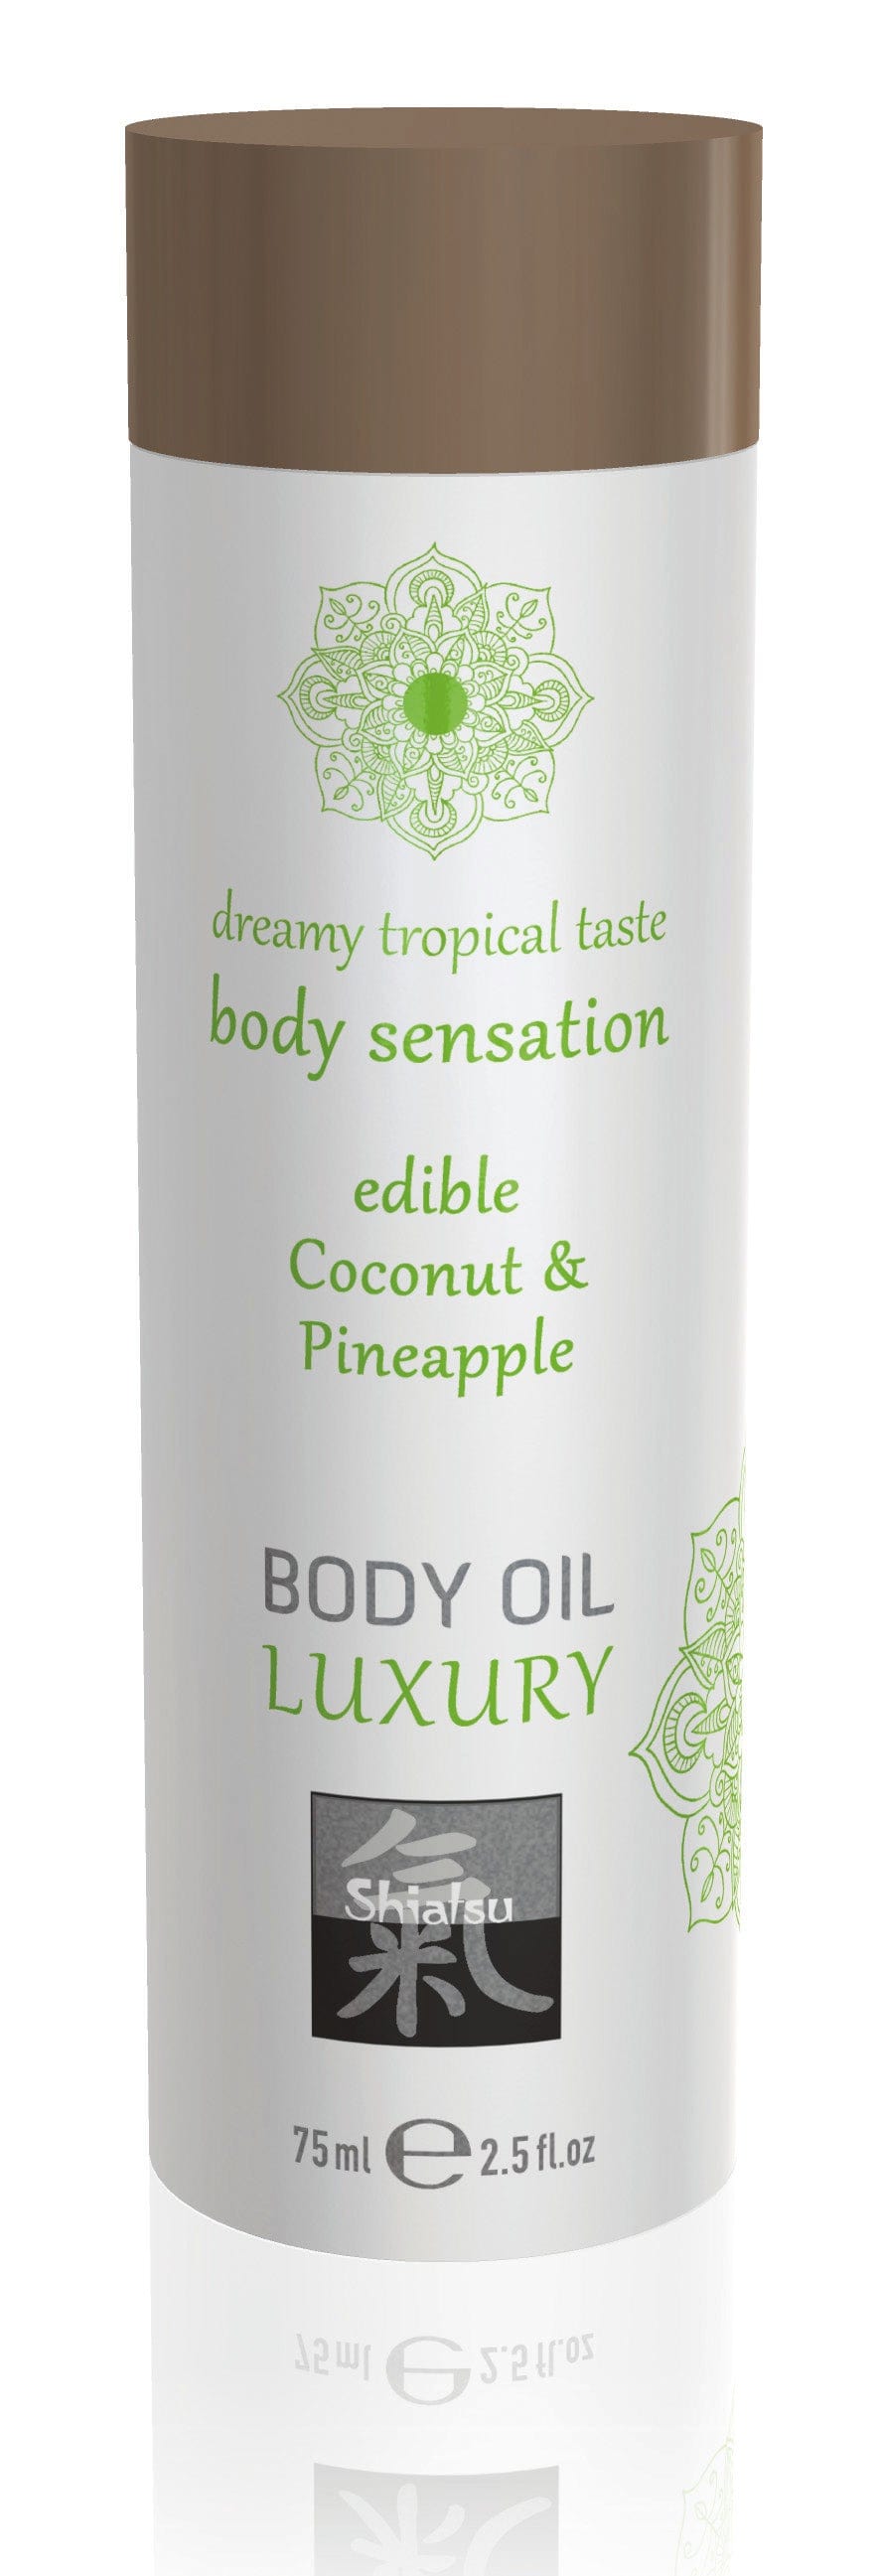 Shiatsu Lotions & Potions Shiatsu Luxury Body Oil Edible Coconut and Pineapple 4042342004830